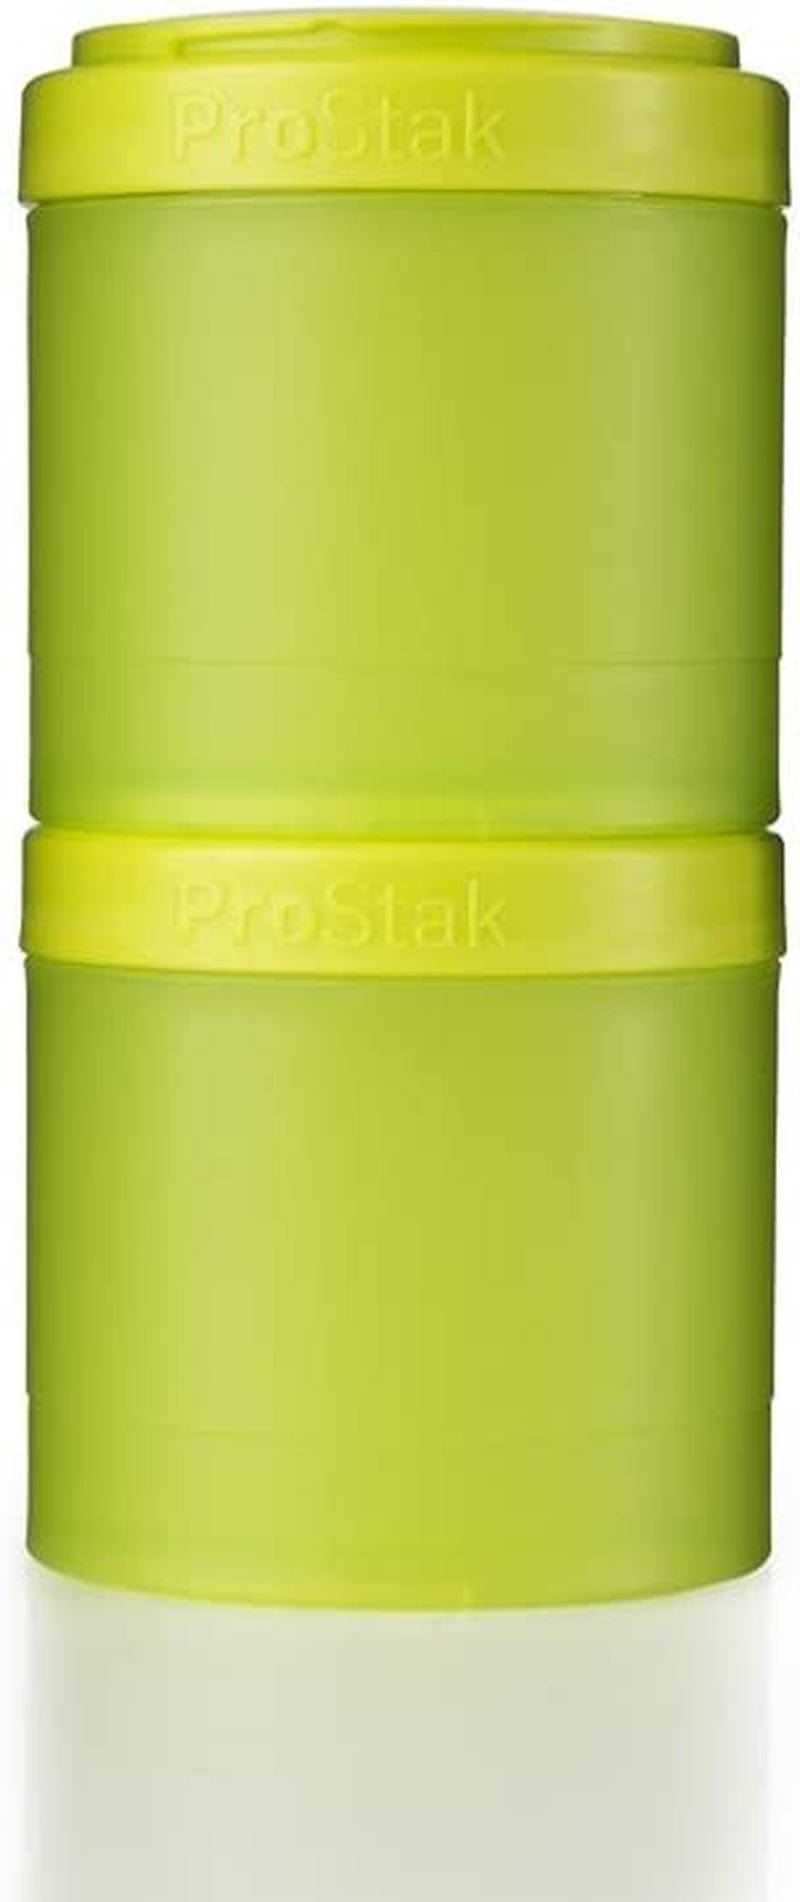 Blenderbottle Pro Stak Prostak Twist N' Lock Storage Jars Expansion 3-Pak with Pill Tray, All Black